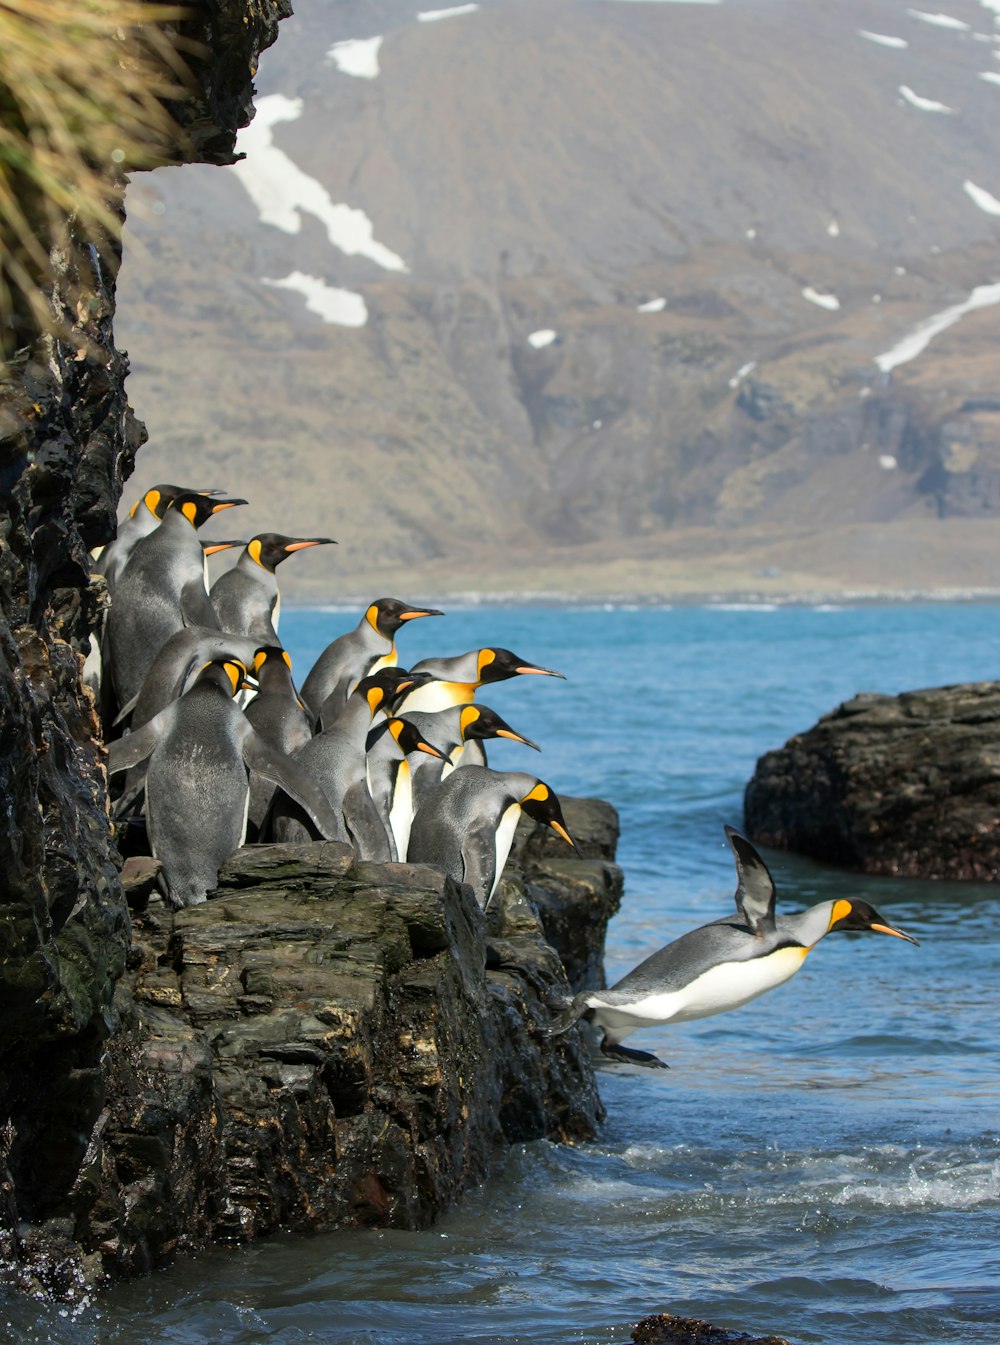 penguins standing on rock formation